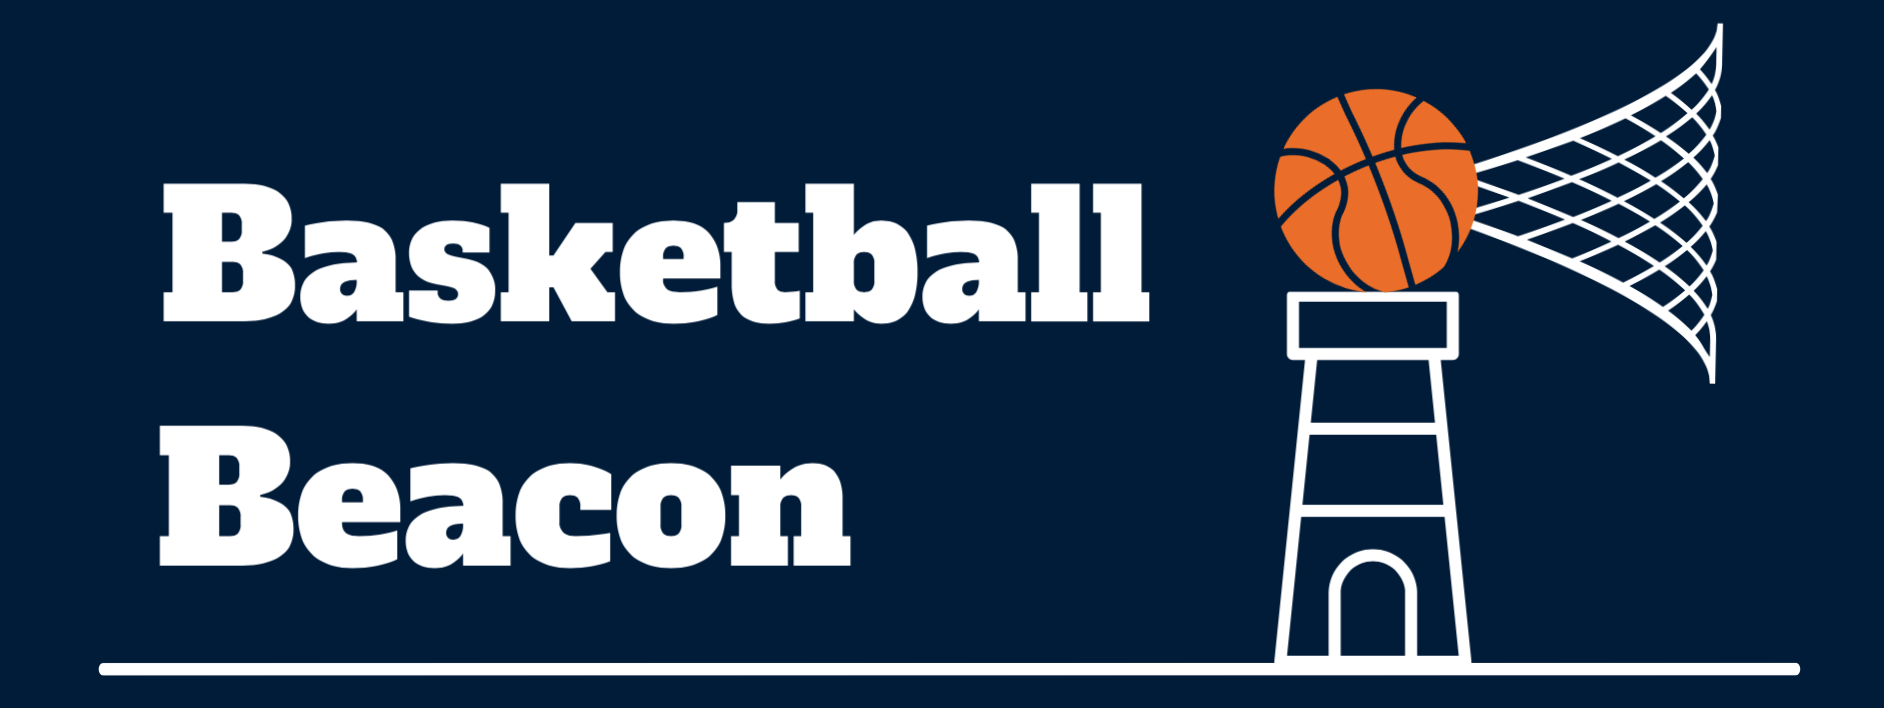 JJ Redick Player Profile - Basketball Beacon